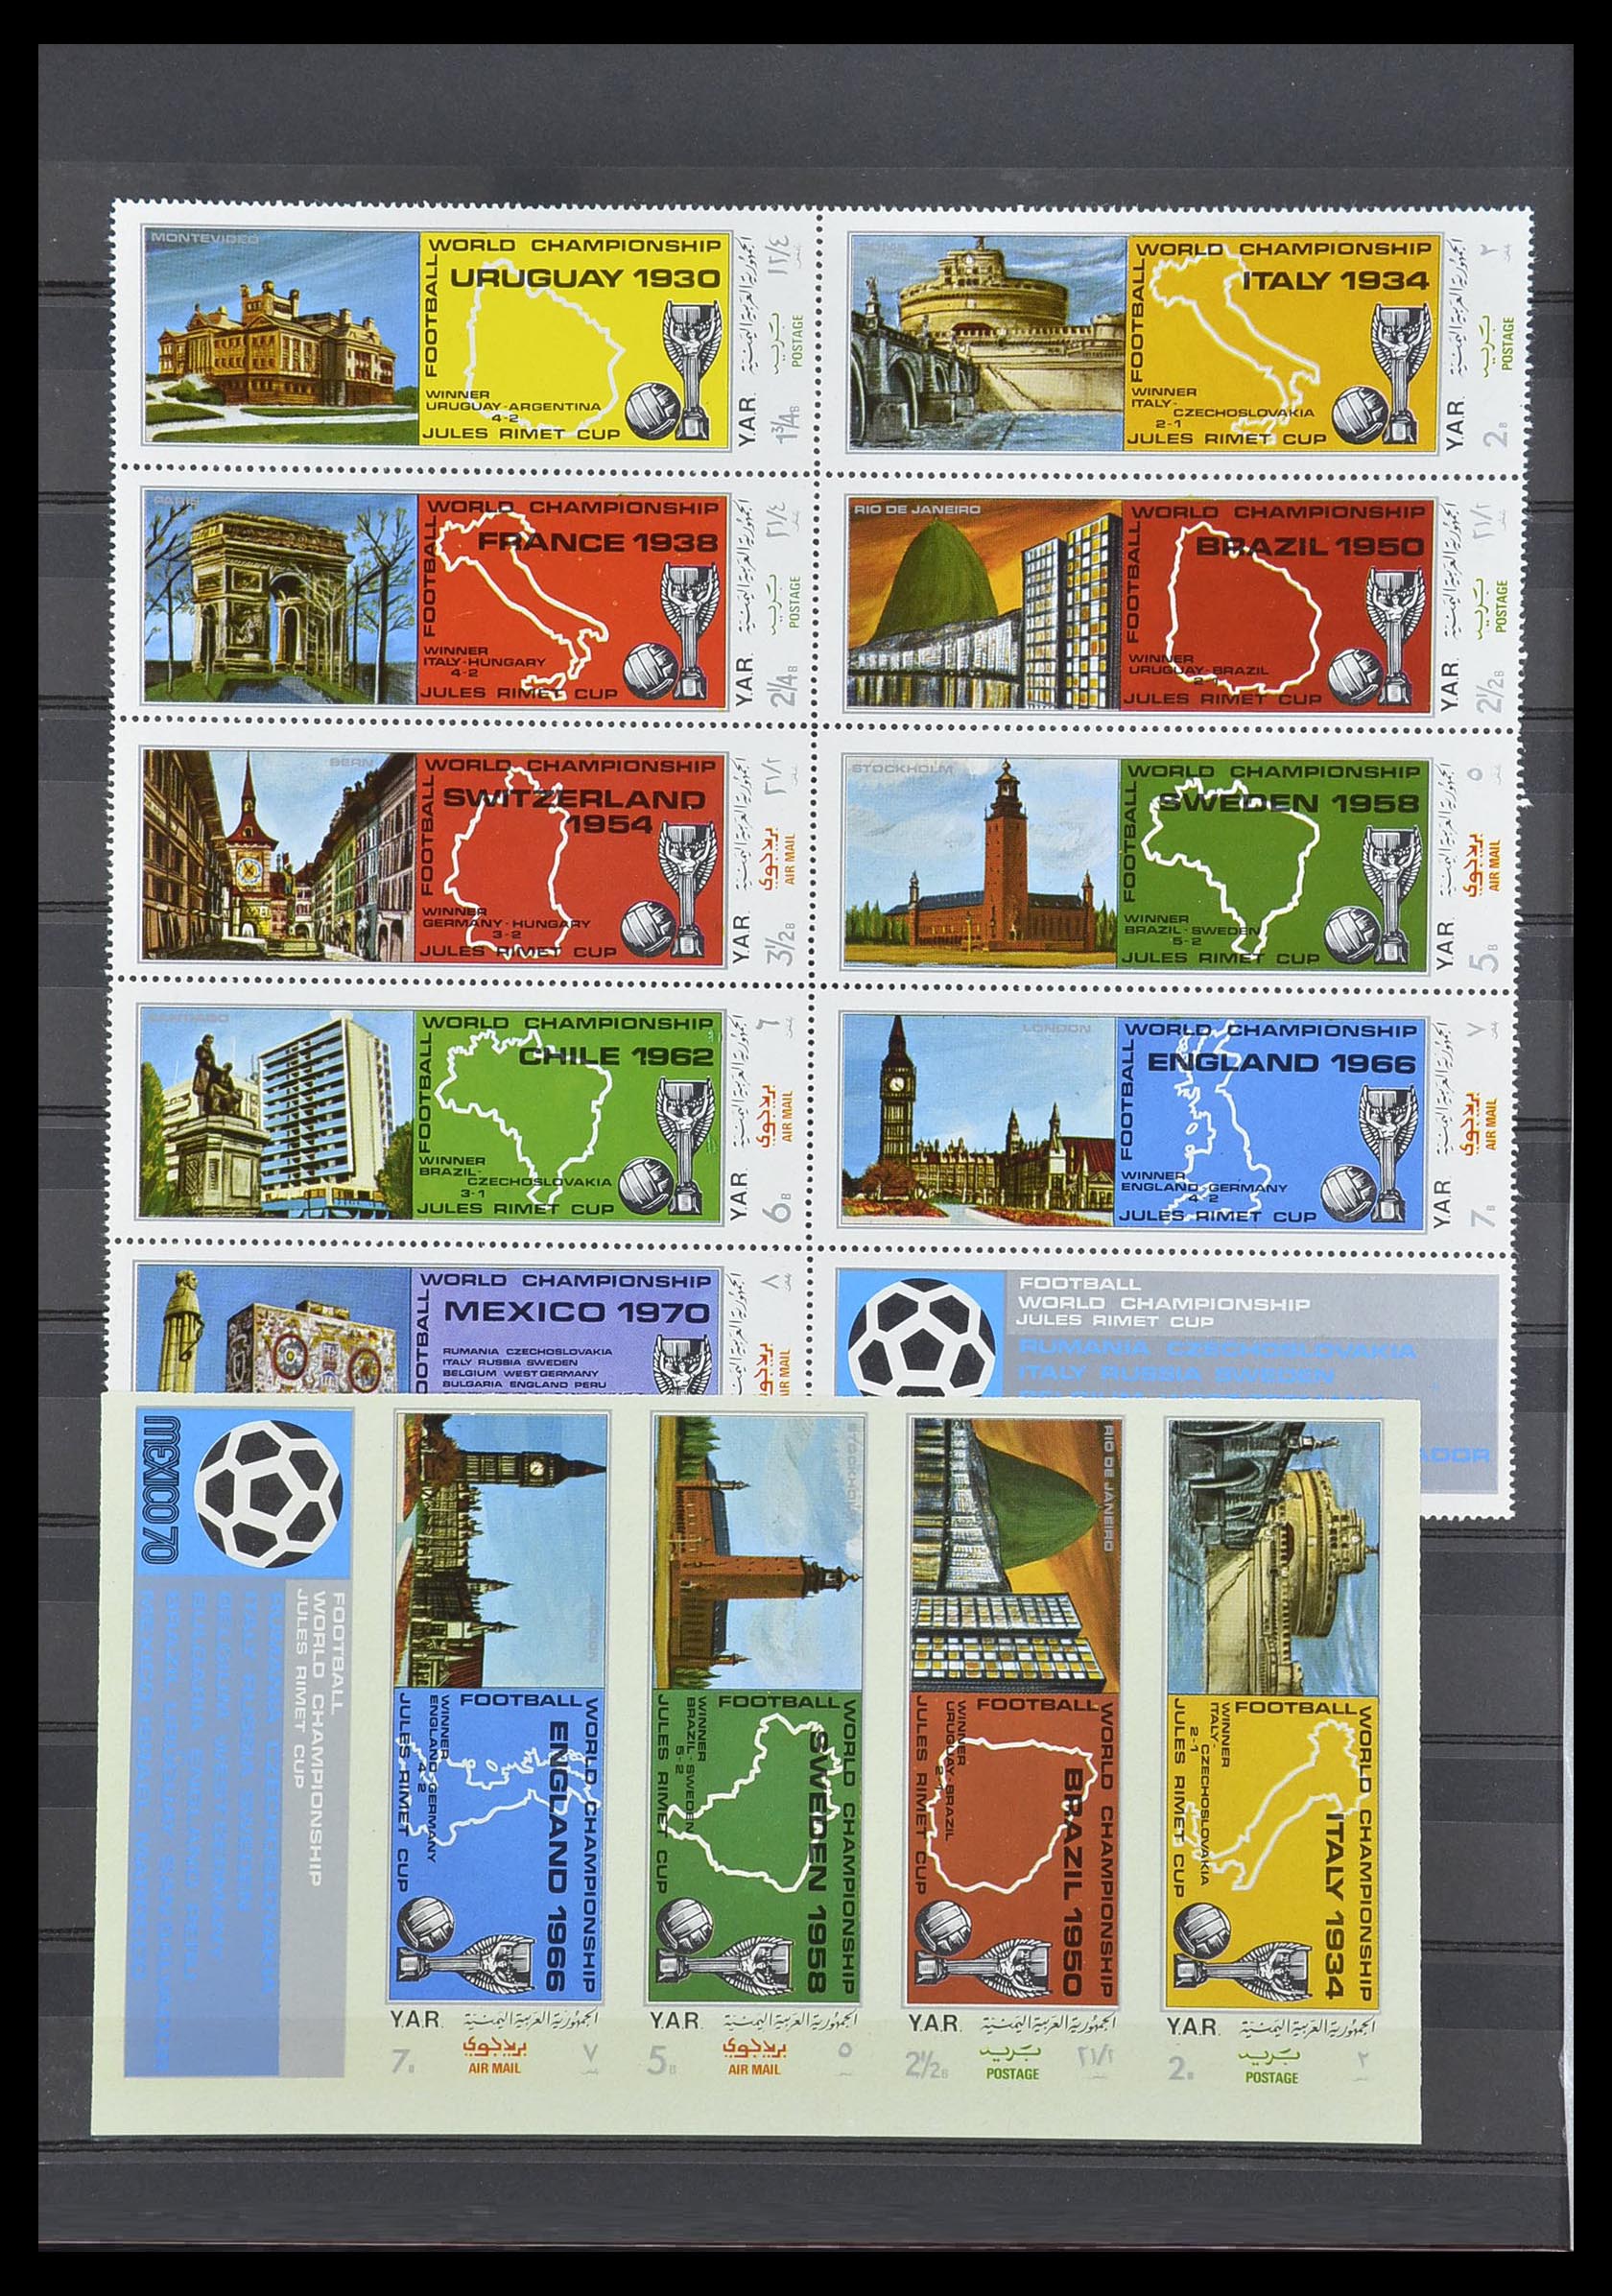 33738 077 - Stamp collection 33738 Yemen 1939-1990.